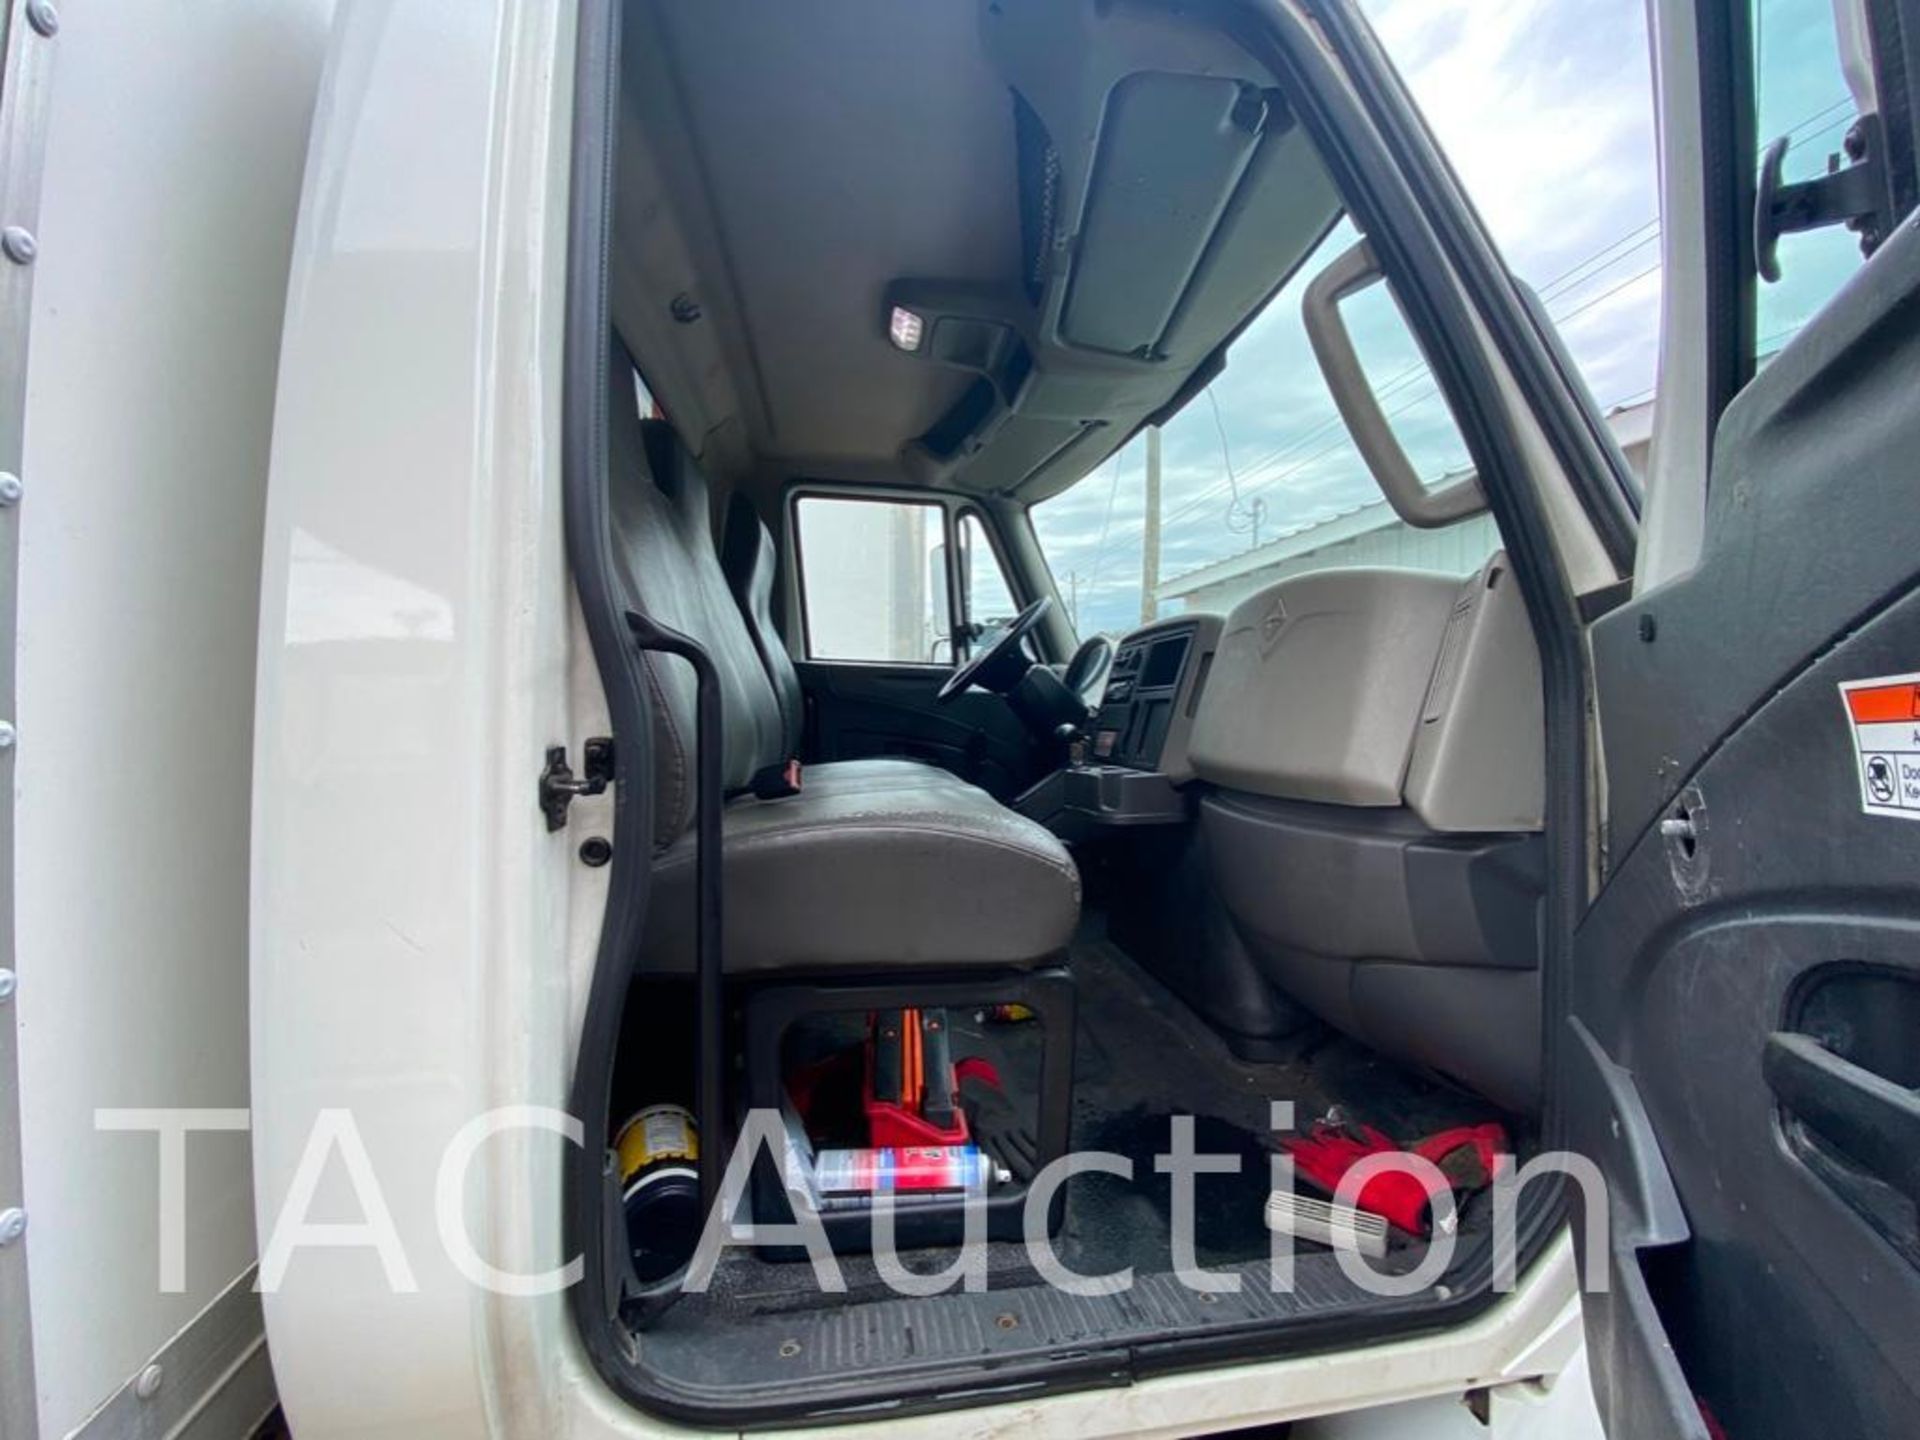 2018 International Durastar 4300 26ft Box Truck - Image 38 of 99